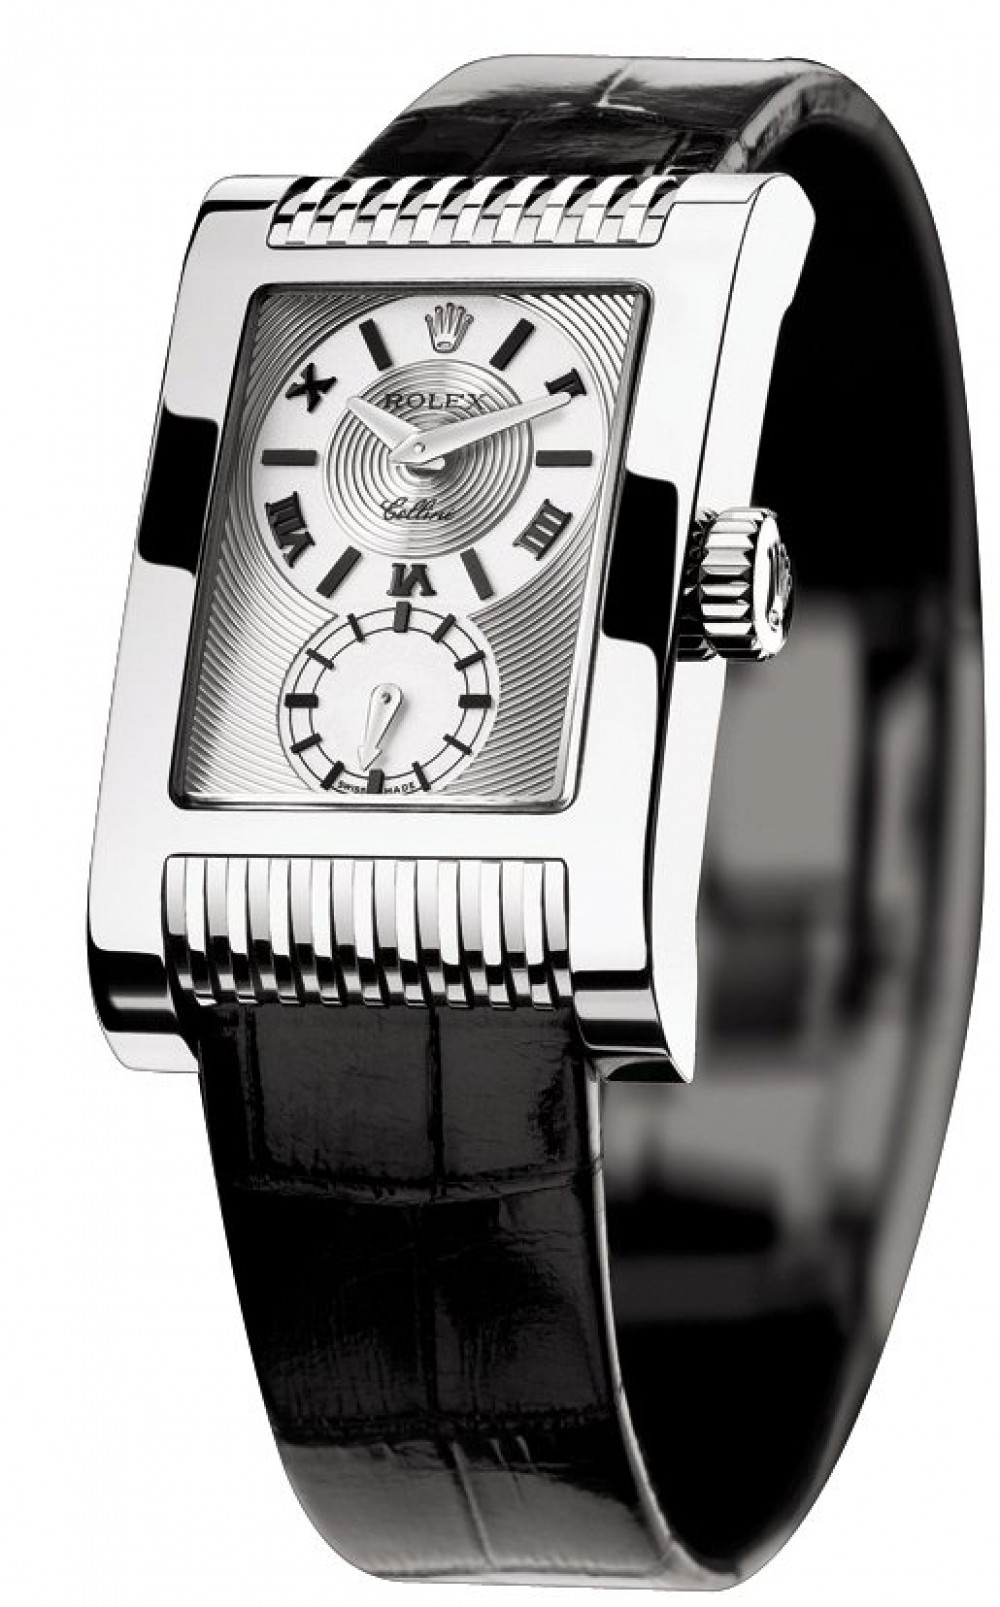 Zegarek firmy Rolex, model Prince